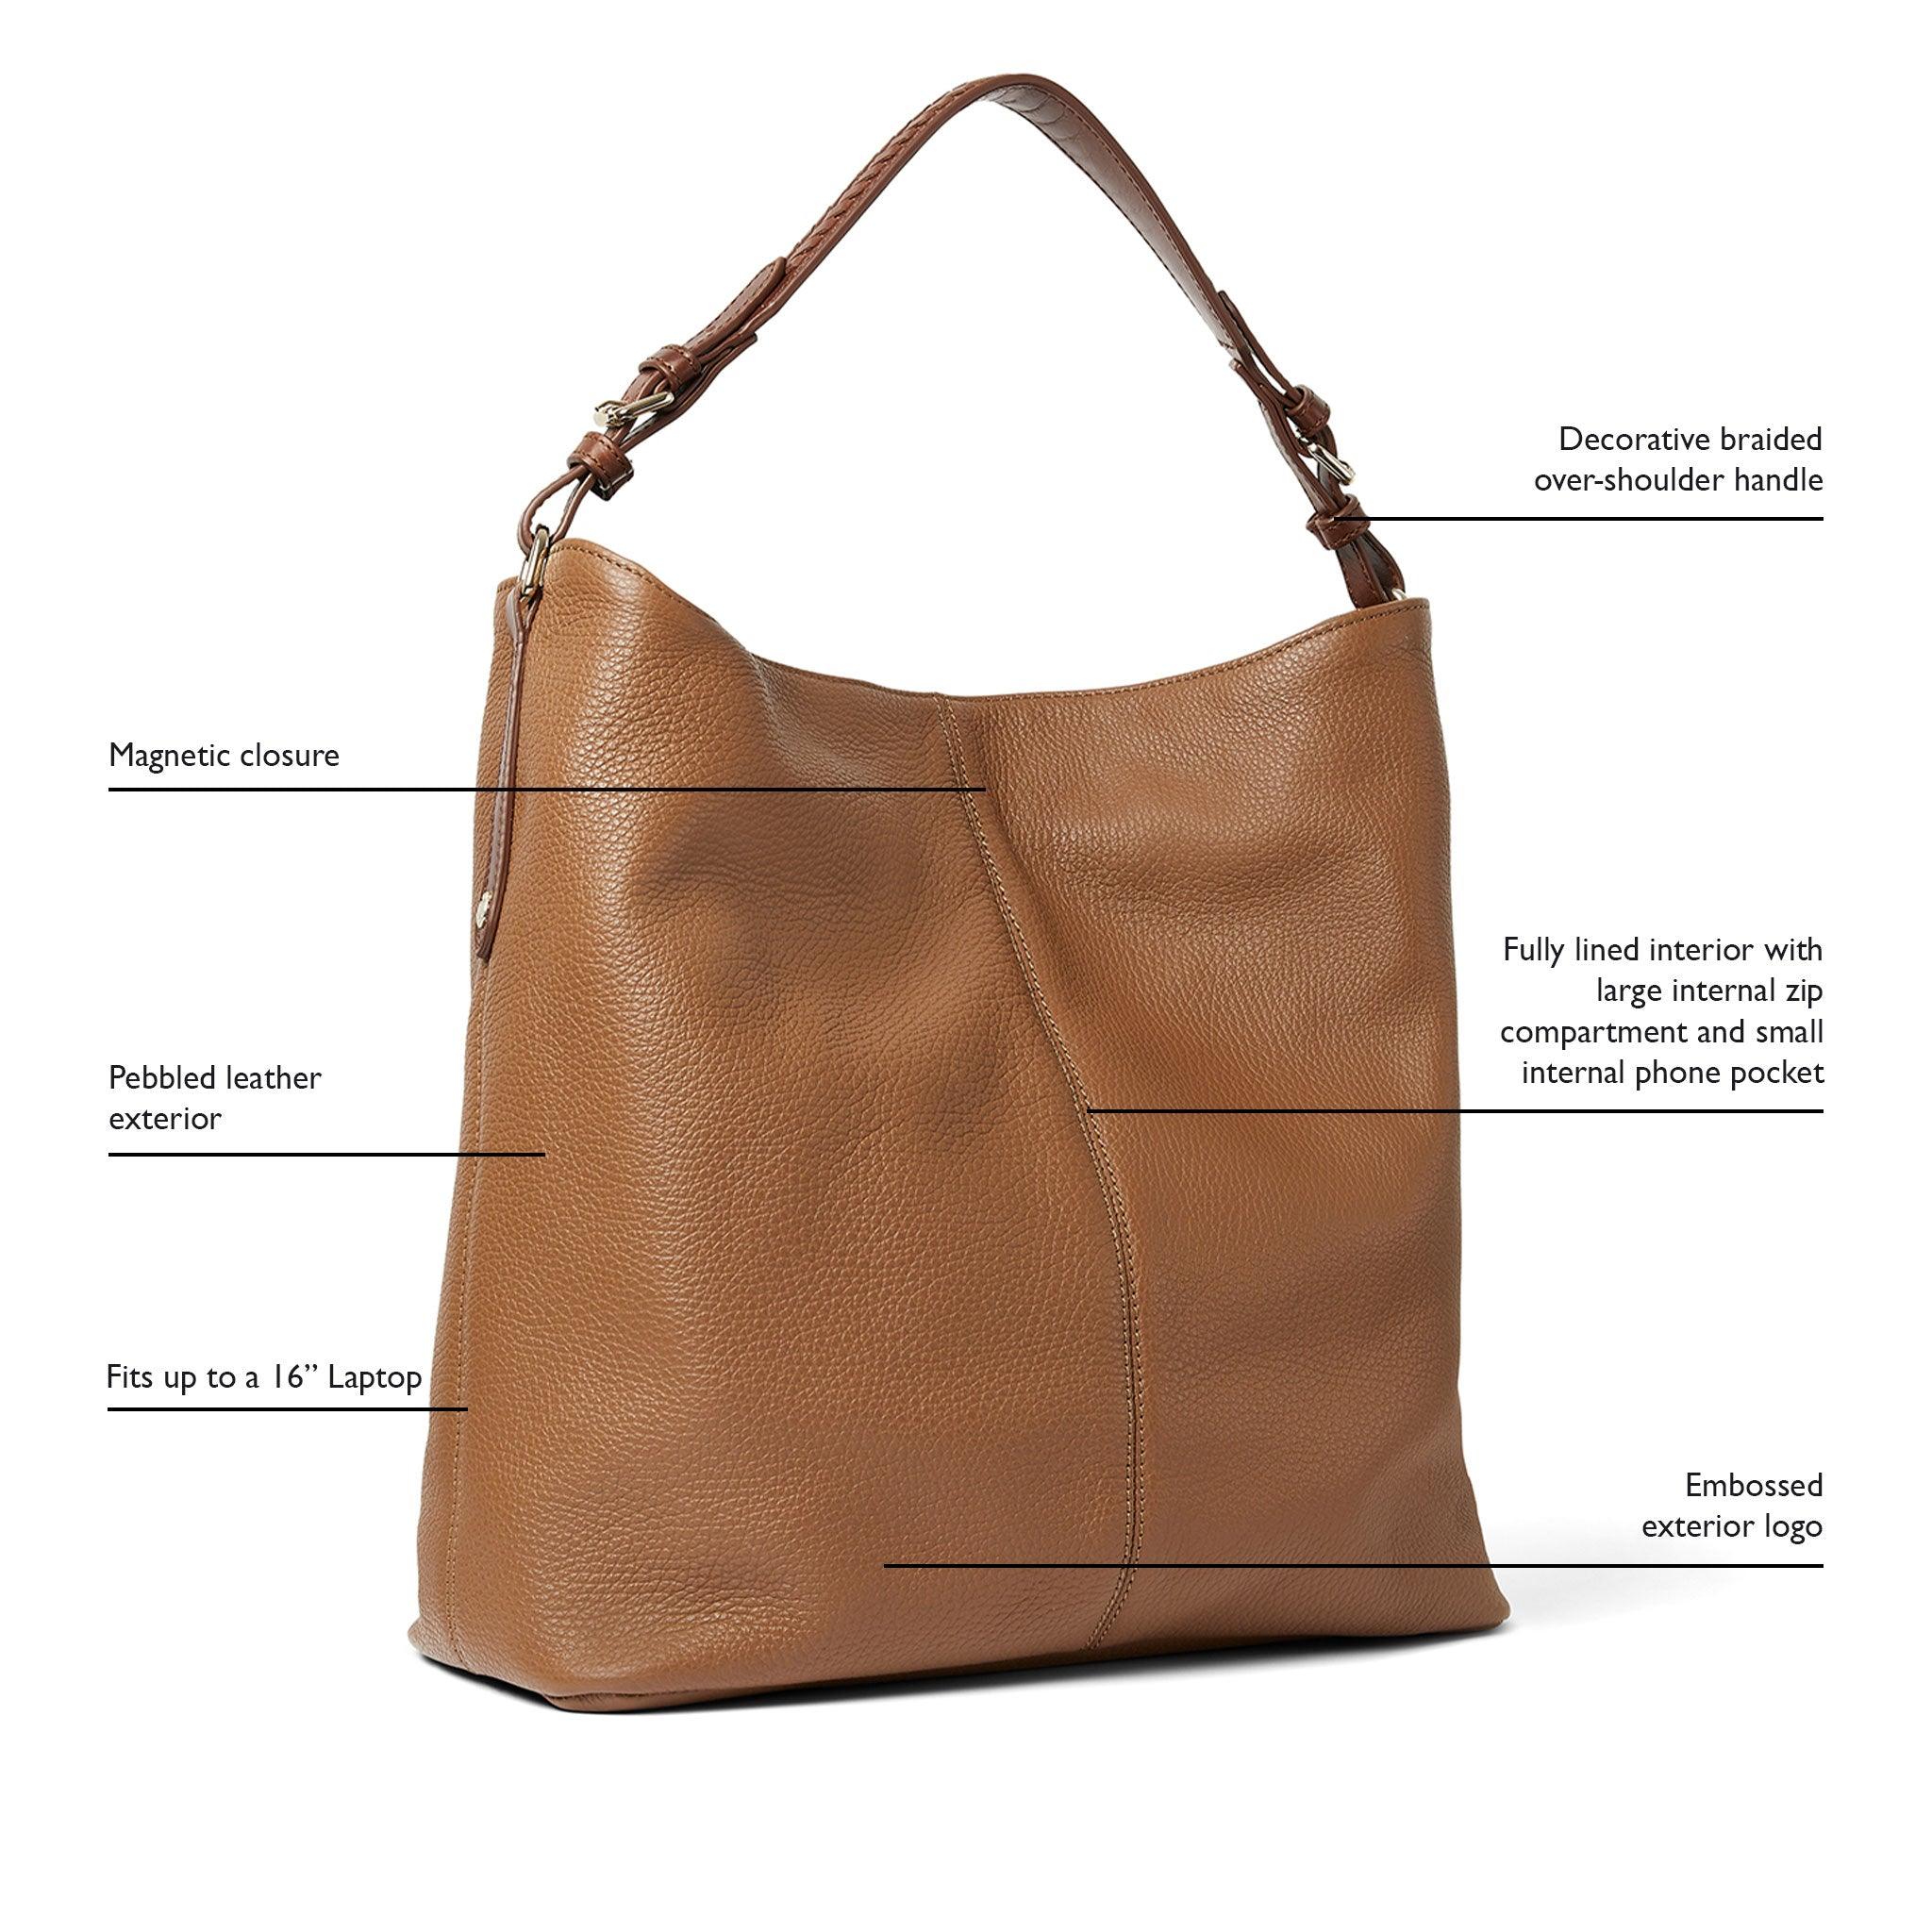 Fairfax & Favor Tetbury Ladies Shoulder Bag - Tan Leather - William Powell